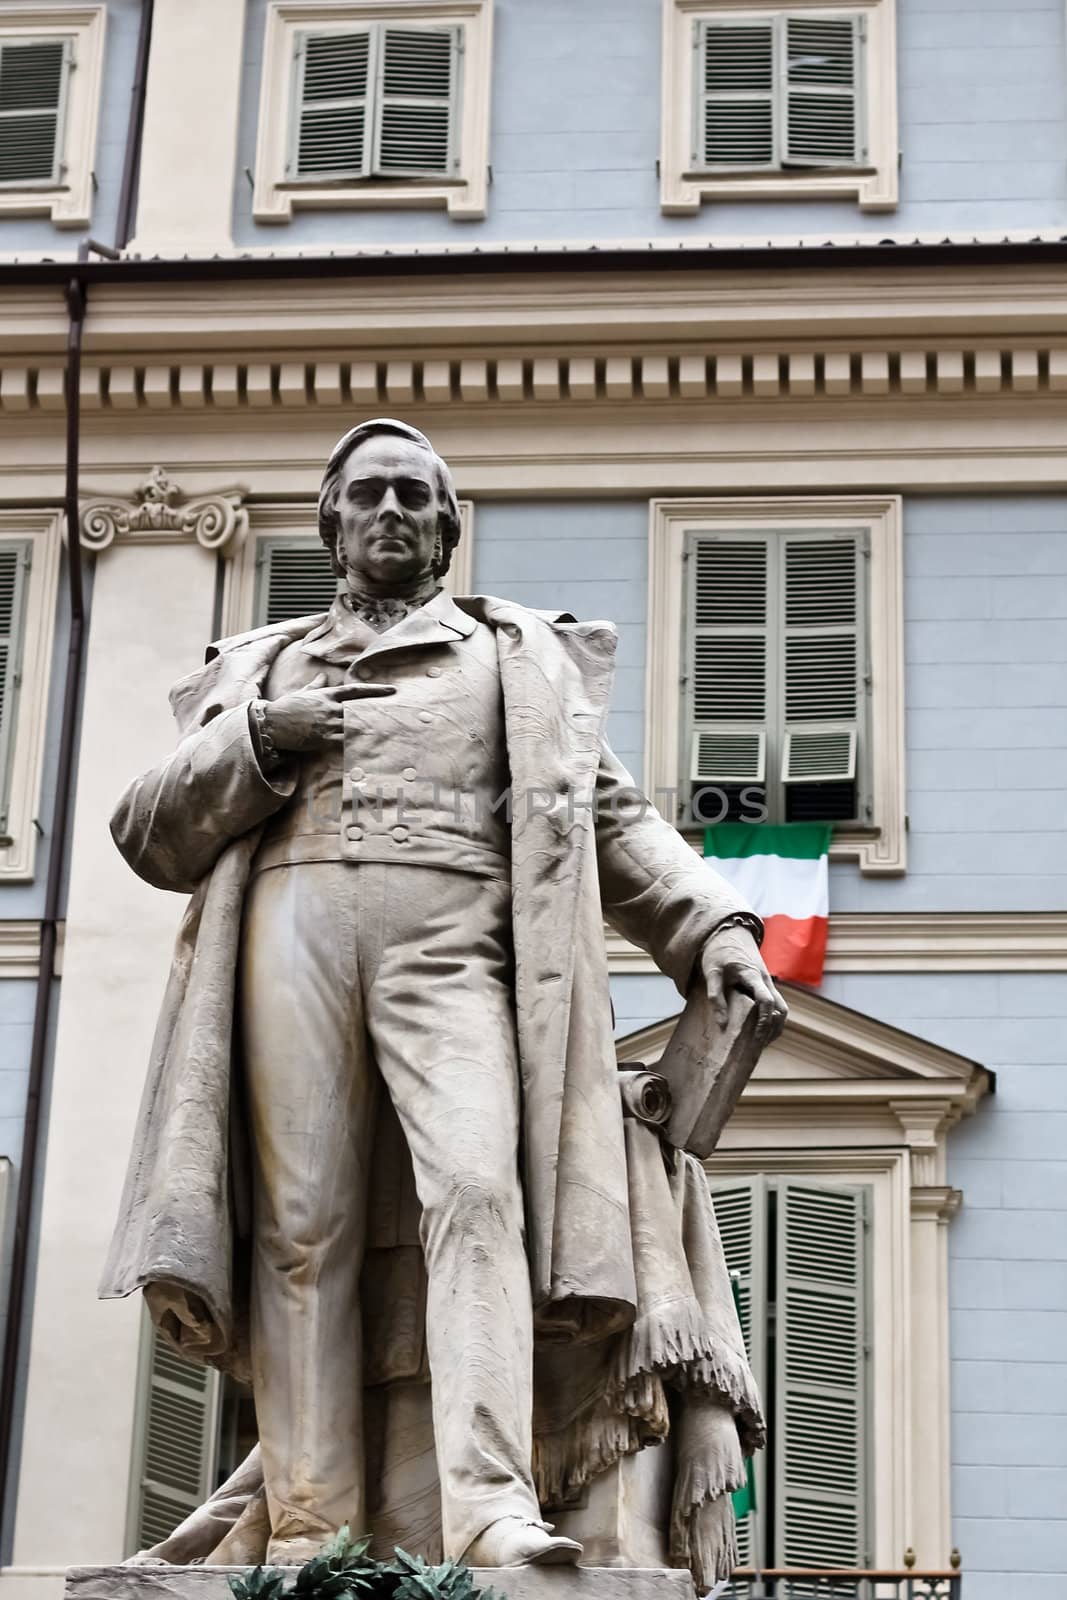 Vincenzo Gioberti monument at Piazza Carignano with Carignano Theater in the background, Torino, Italy